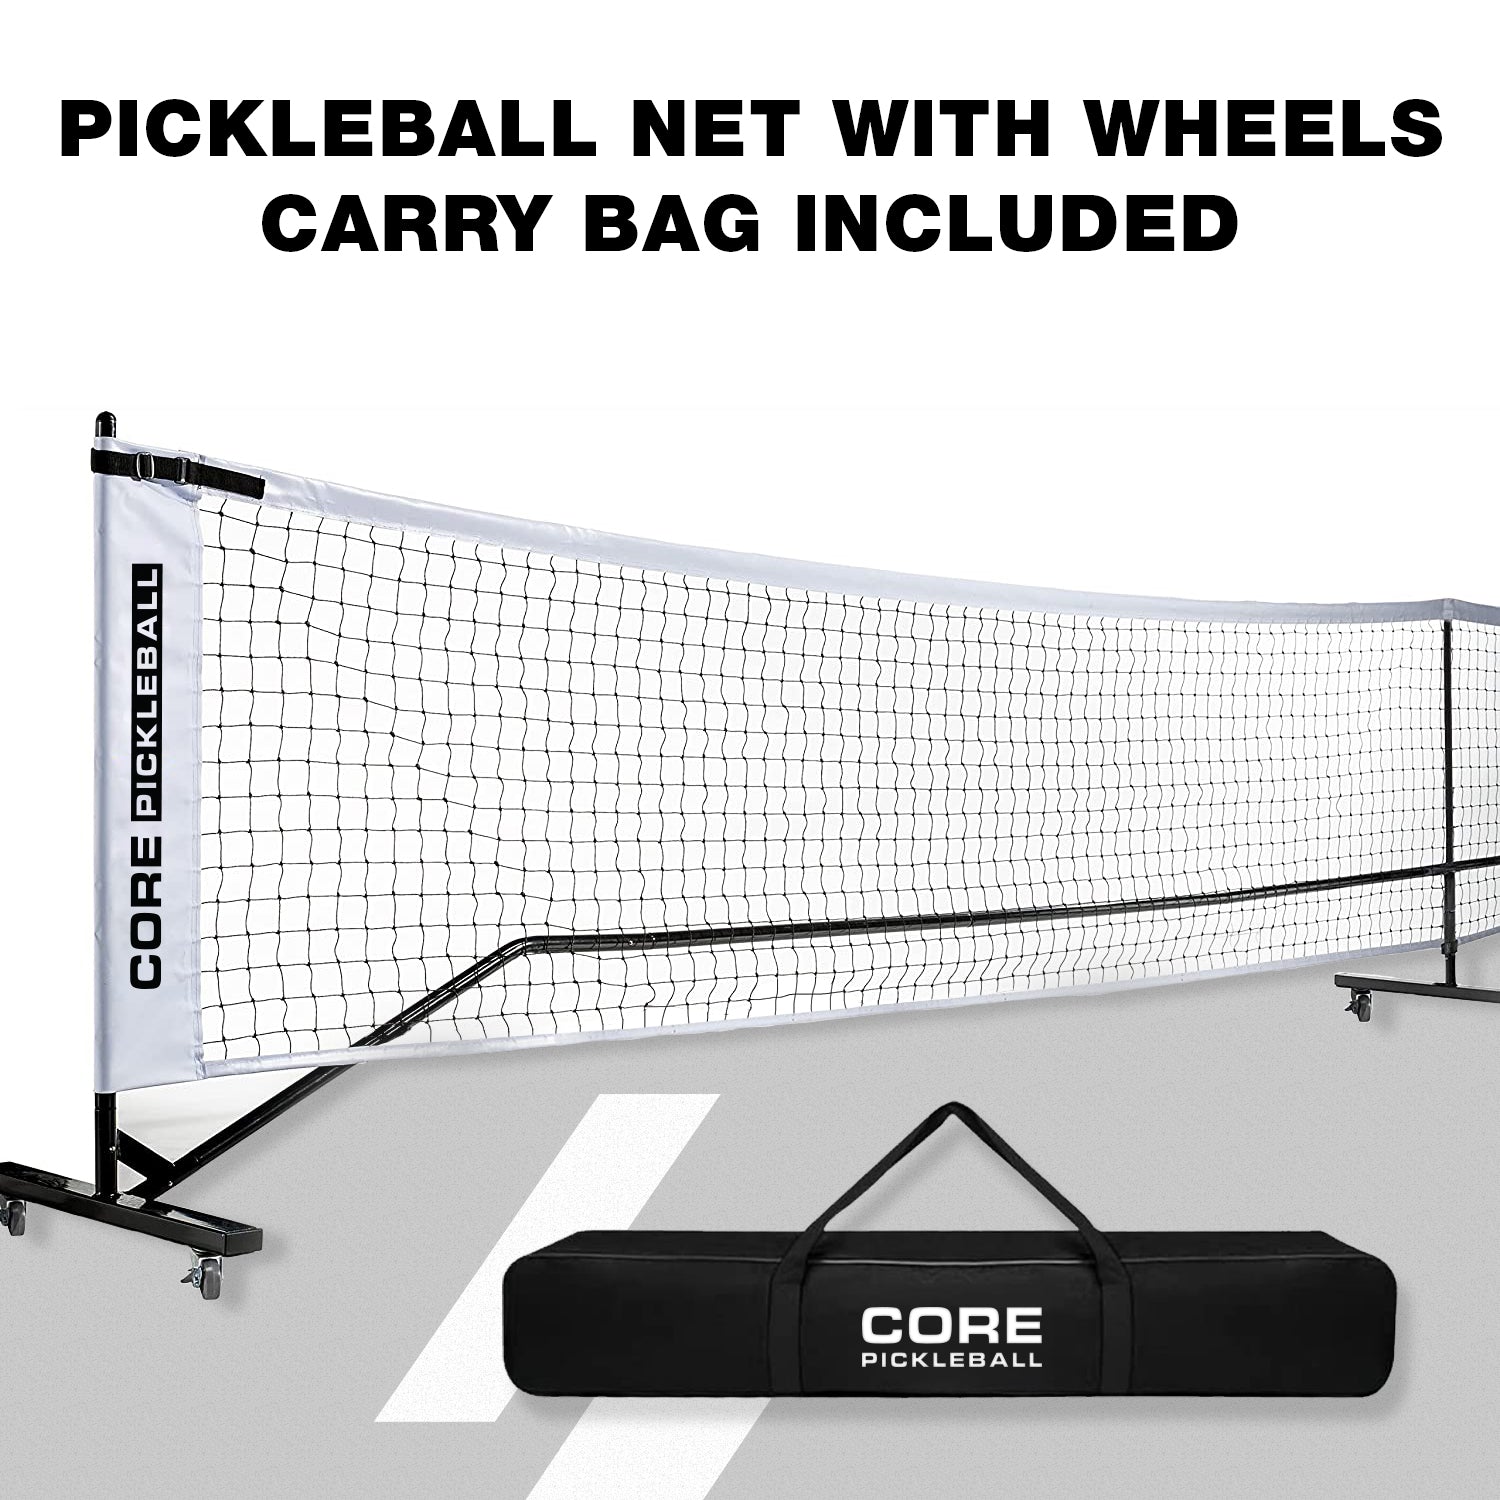 PPR CORE Pickleball Deluxe Portable Rolling Net System - CORE Pickleball